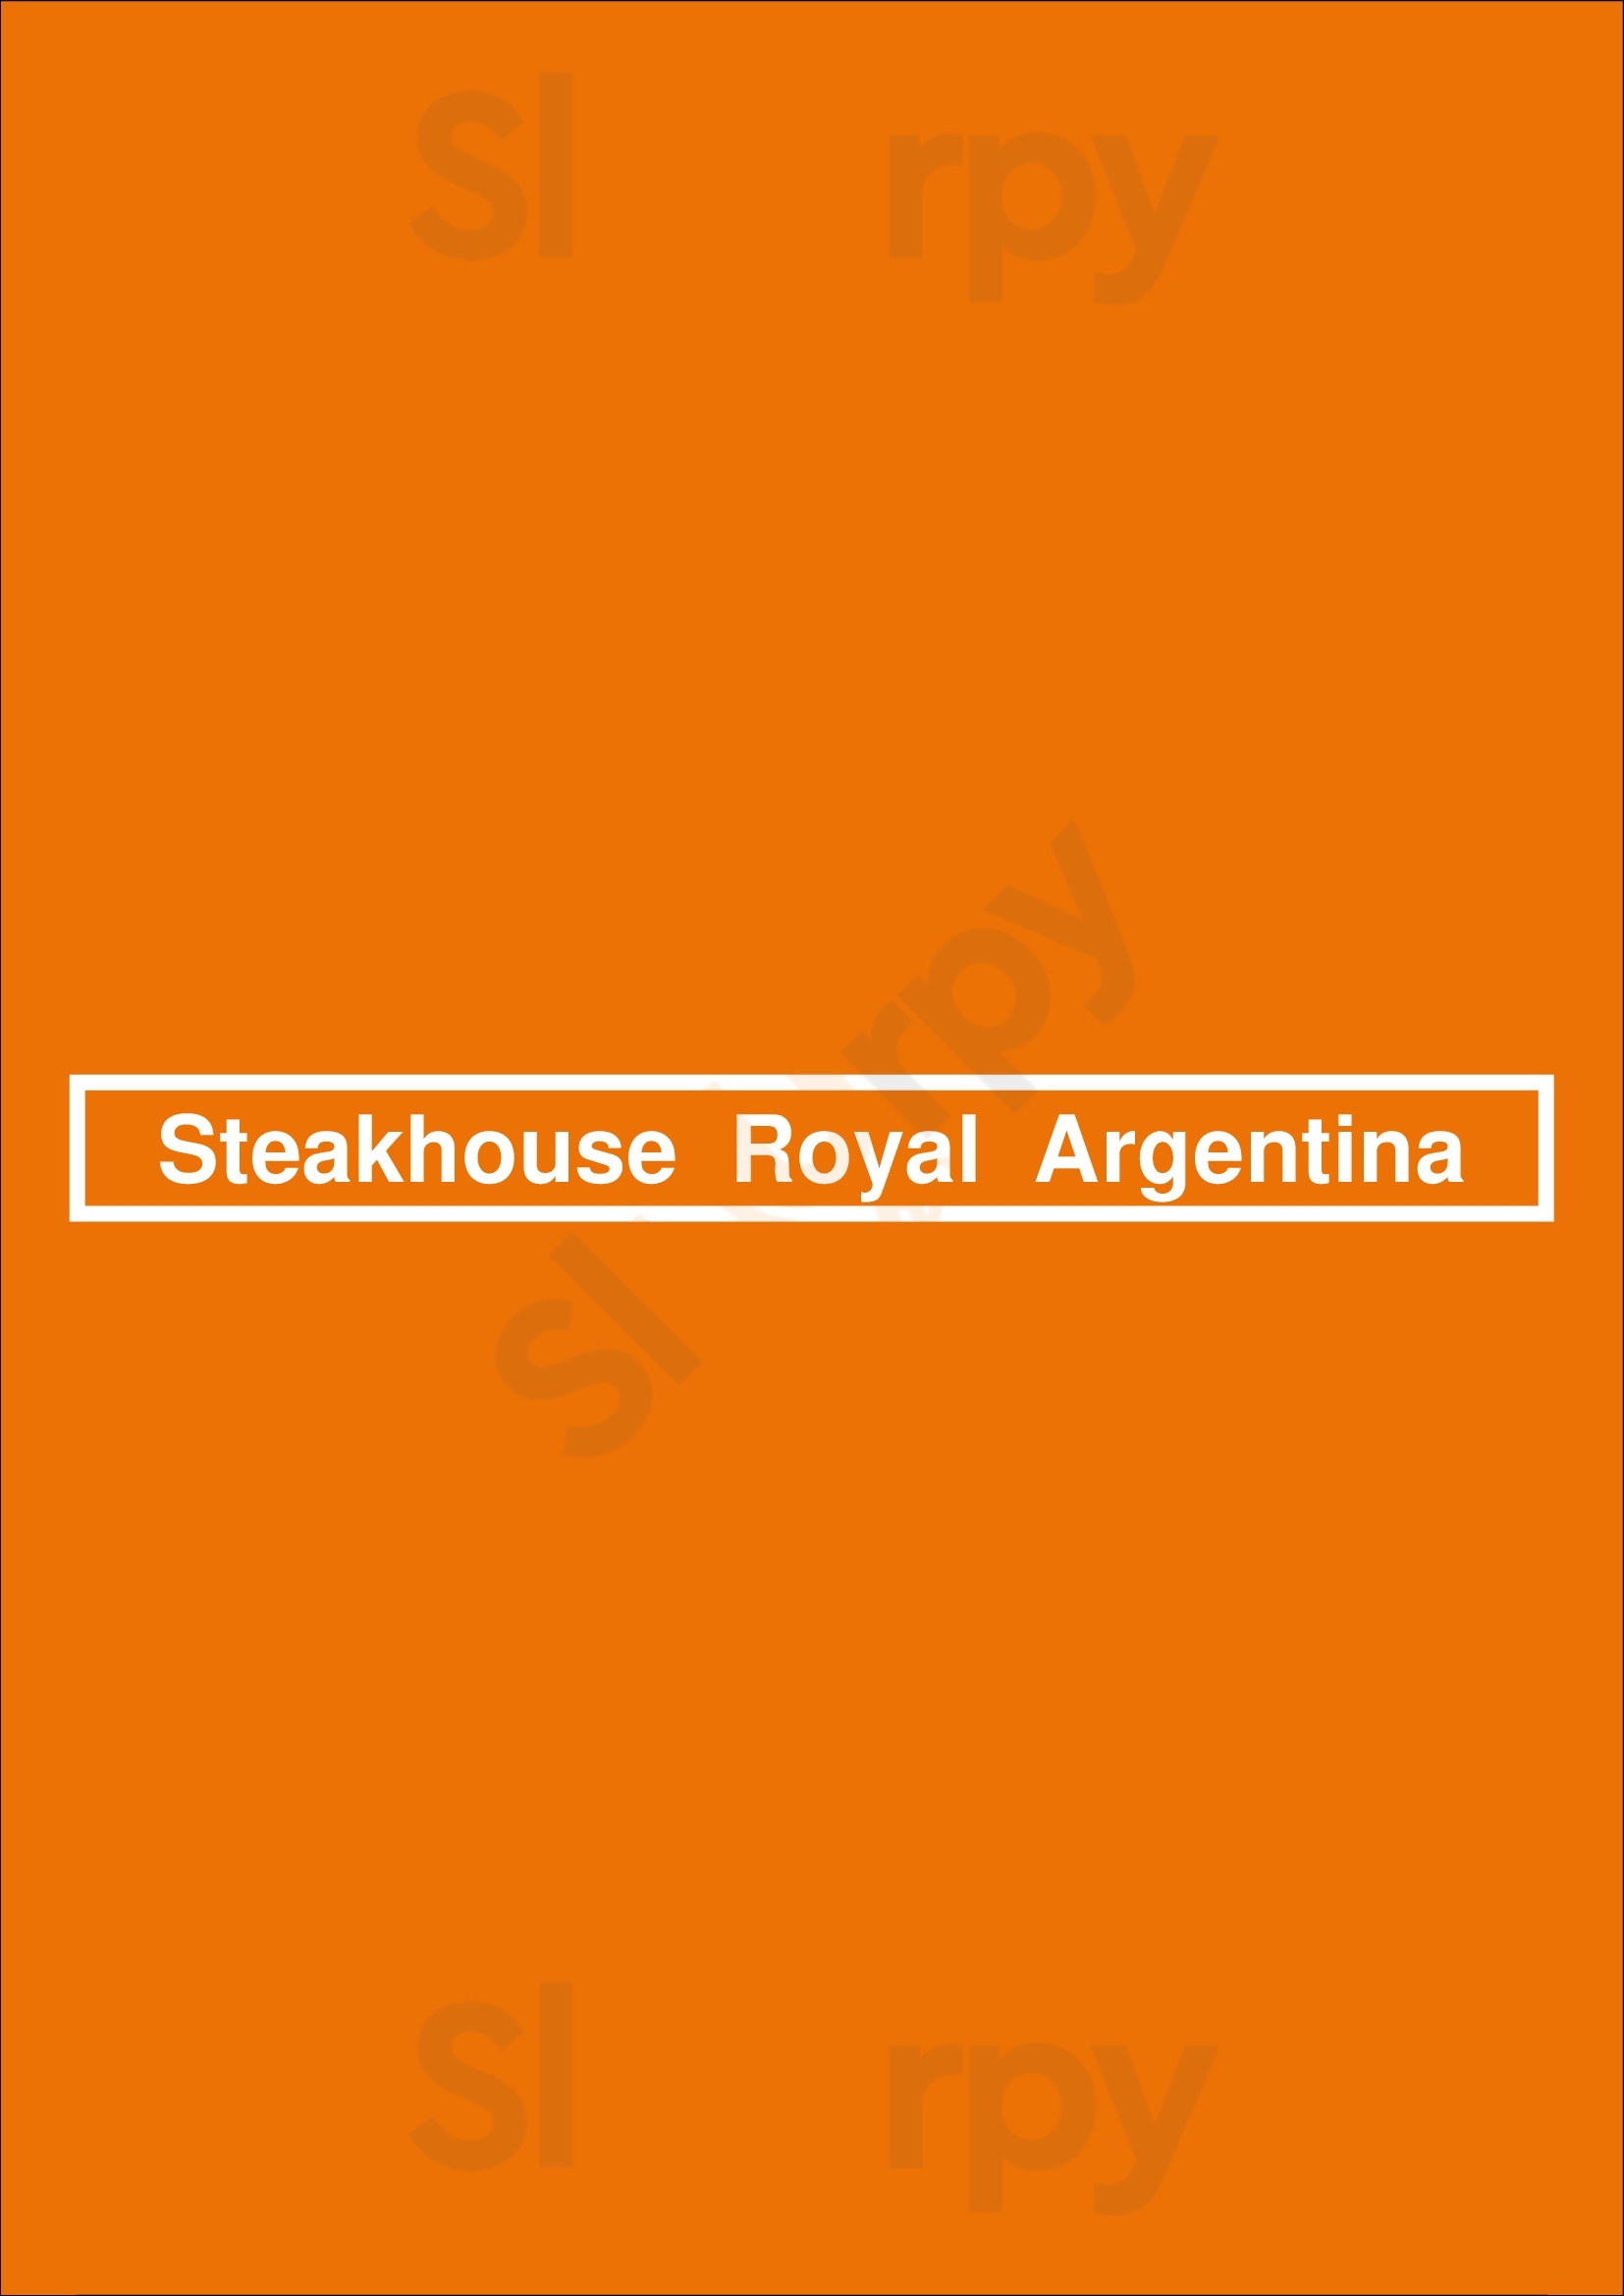 Steakhouse  Royal  Argentina Hengelo Menu - 1